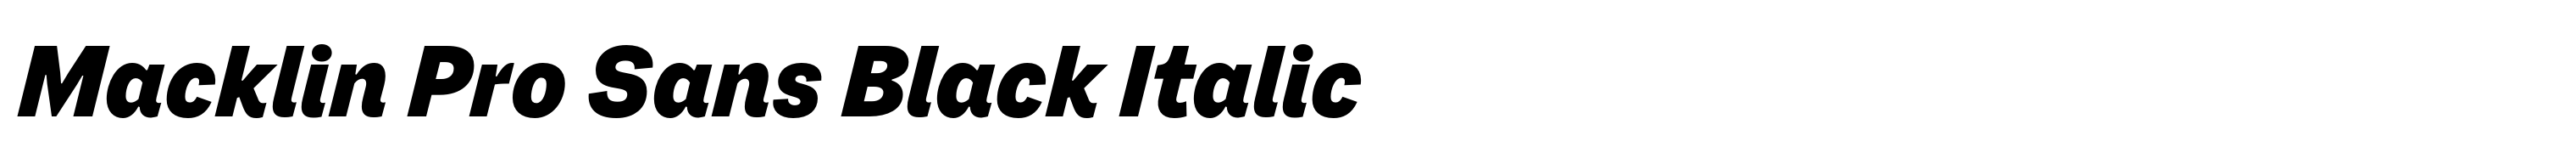 Macklin Pro Sans Black Italic